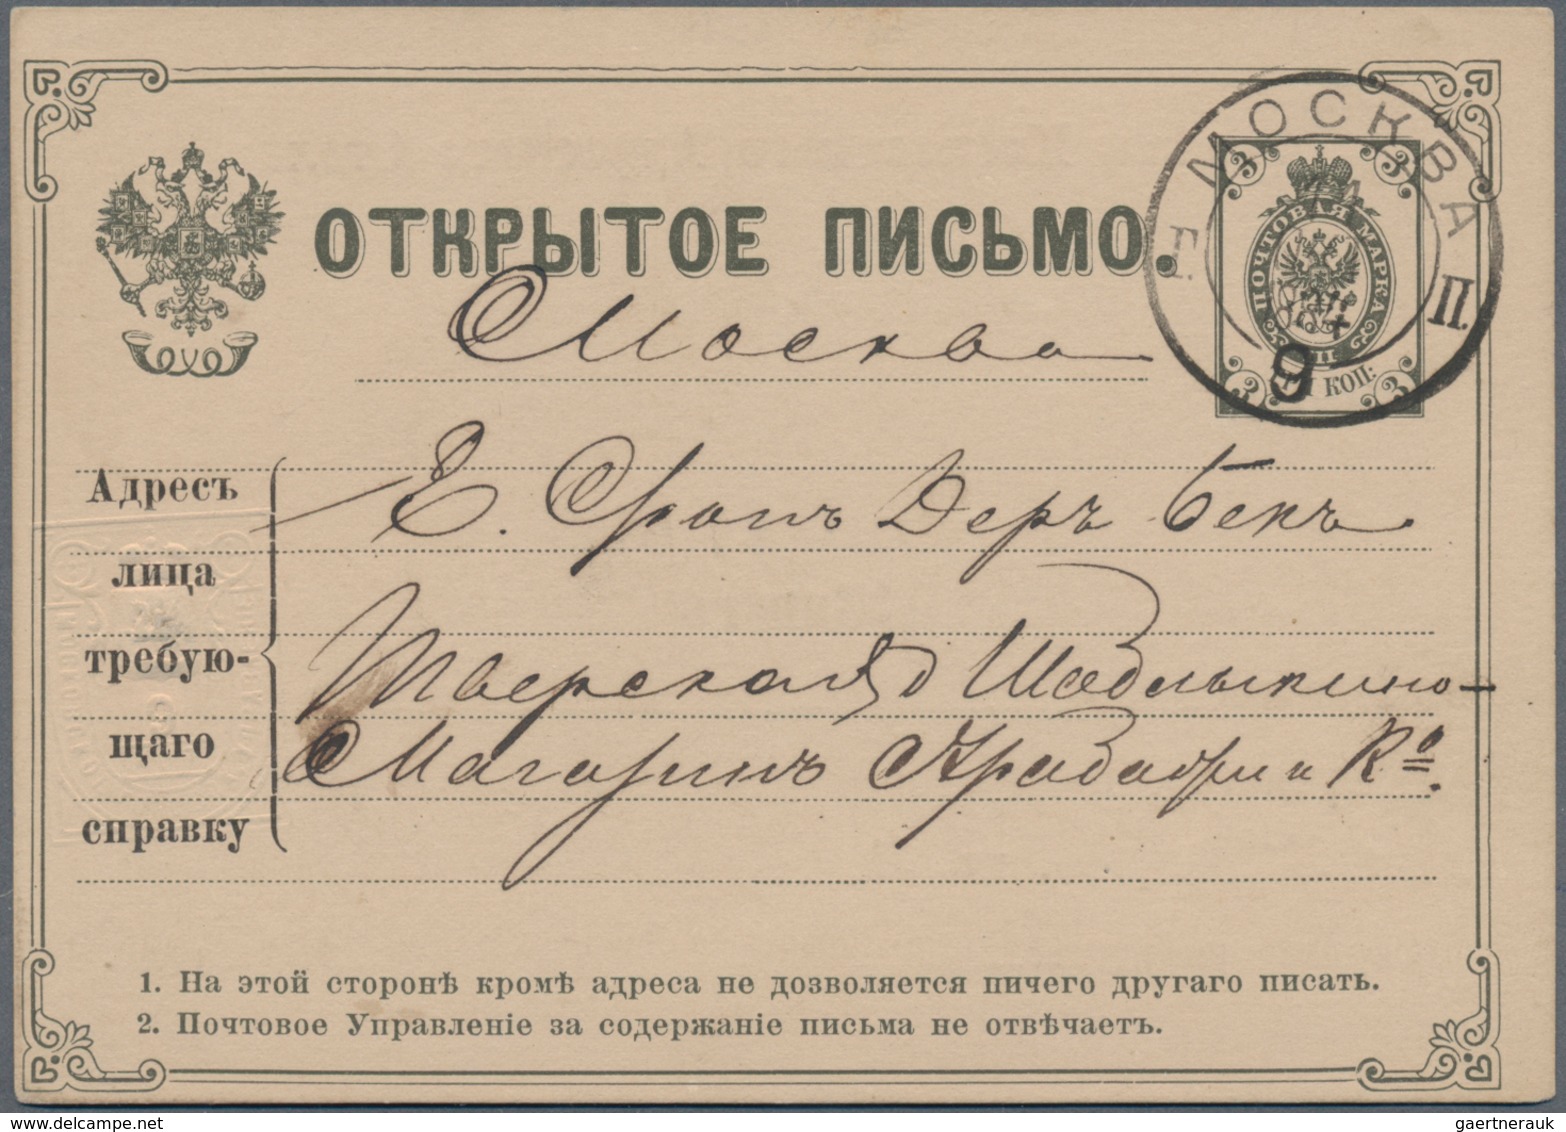 Russland - Ganzsachen: 1855/1916 ca. 93 postal stationery cards (incl. preprinted cards) and envelop